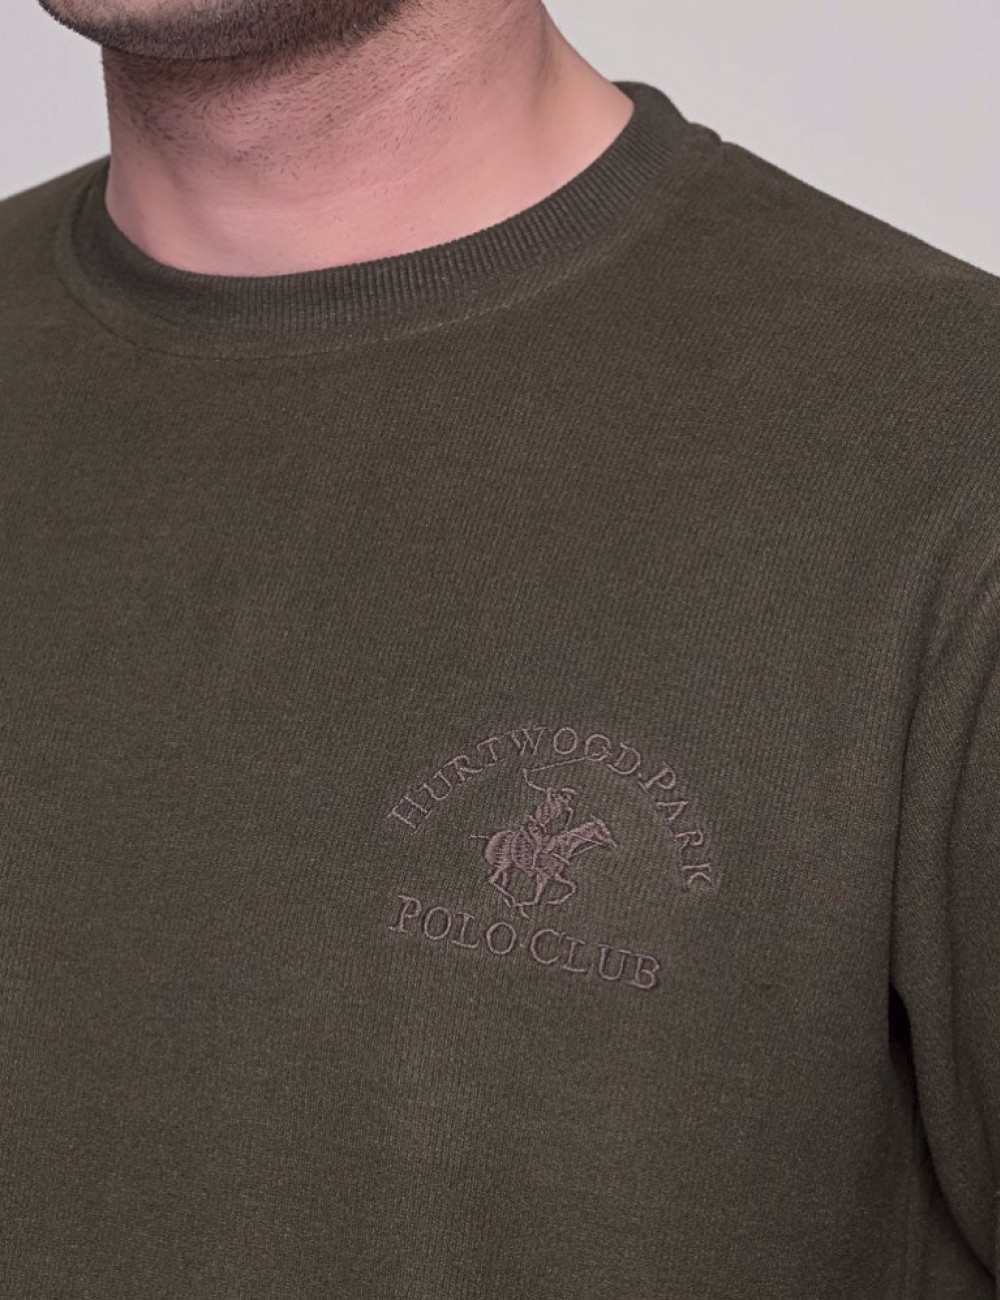 Everbest Ανδρική χακί ριπ μπλούζα με βελούδινη υφή Plus size 241031